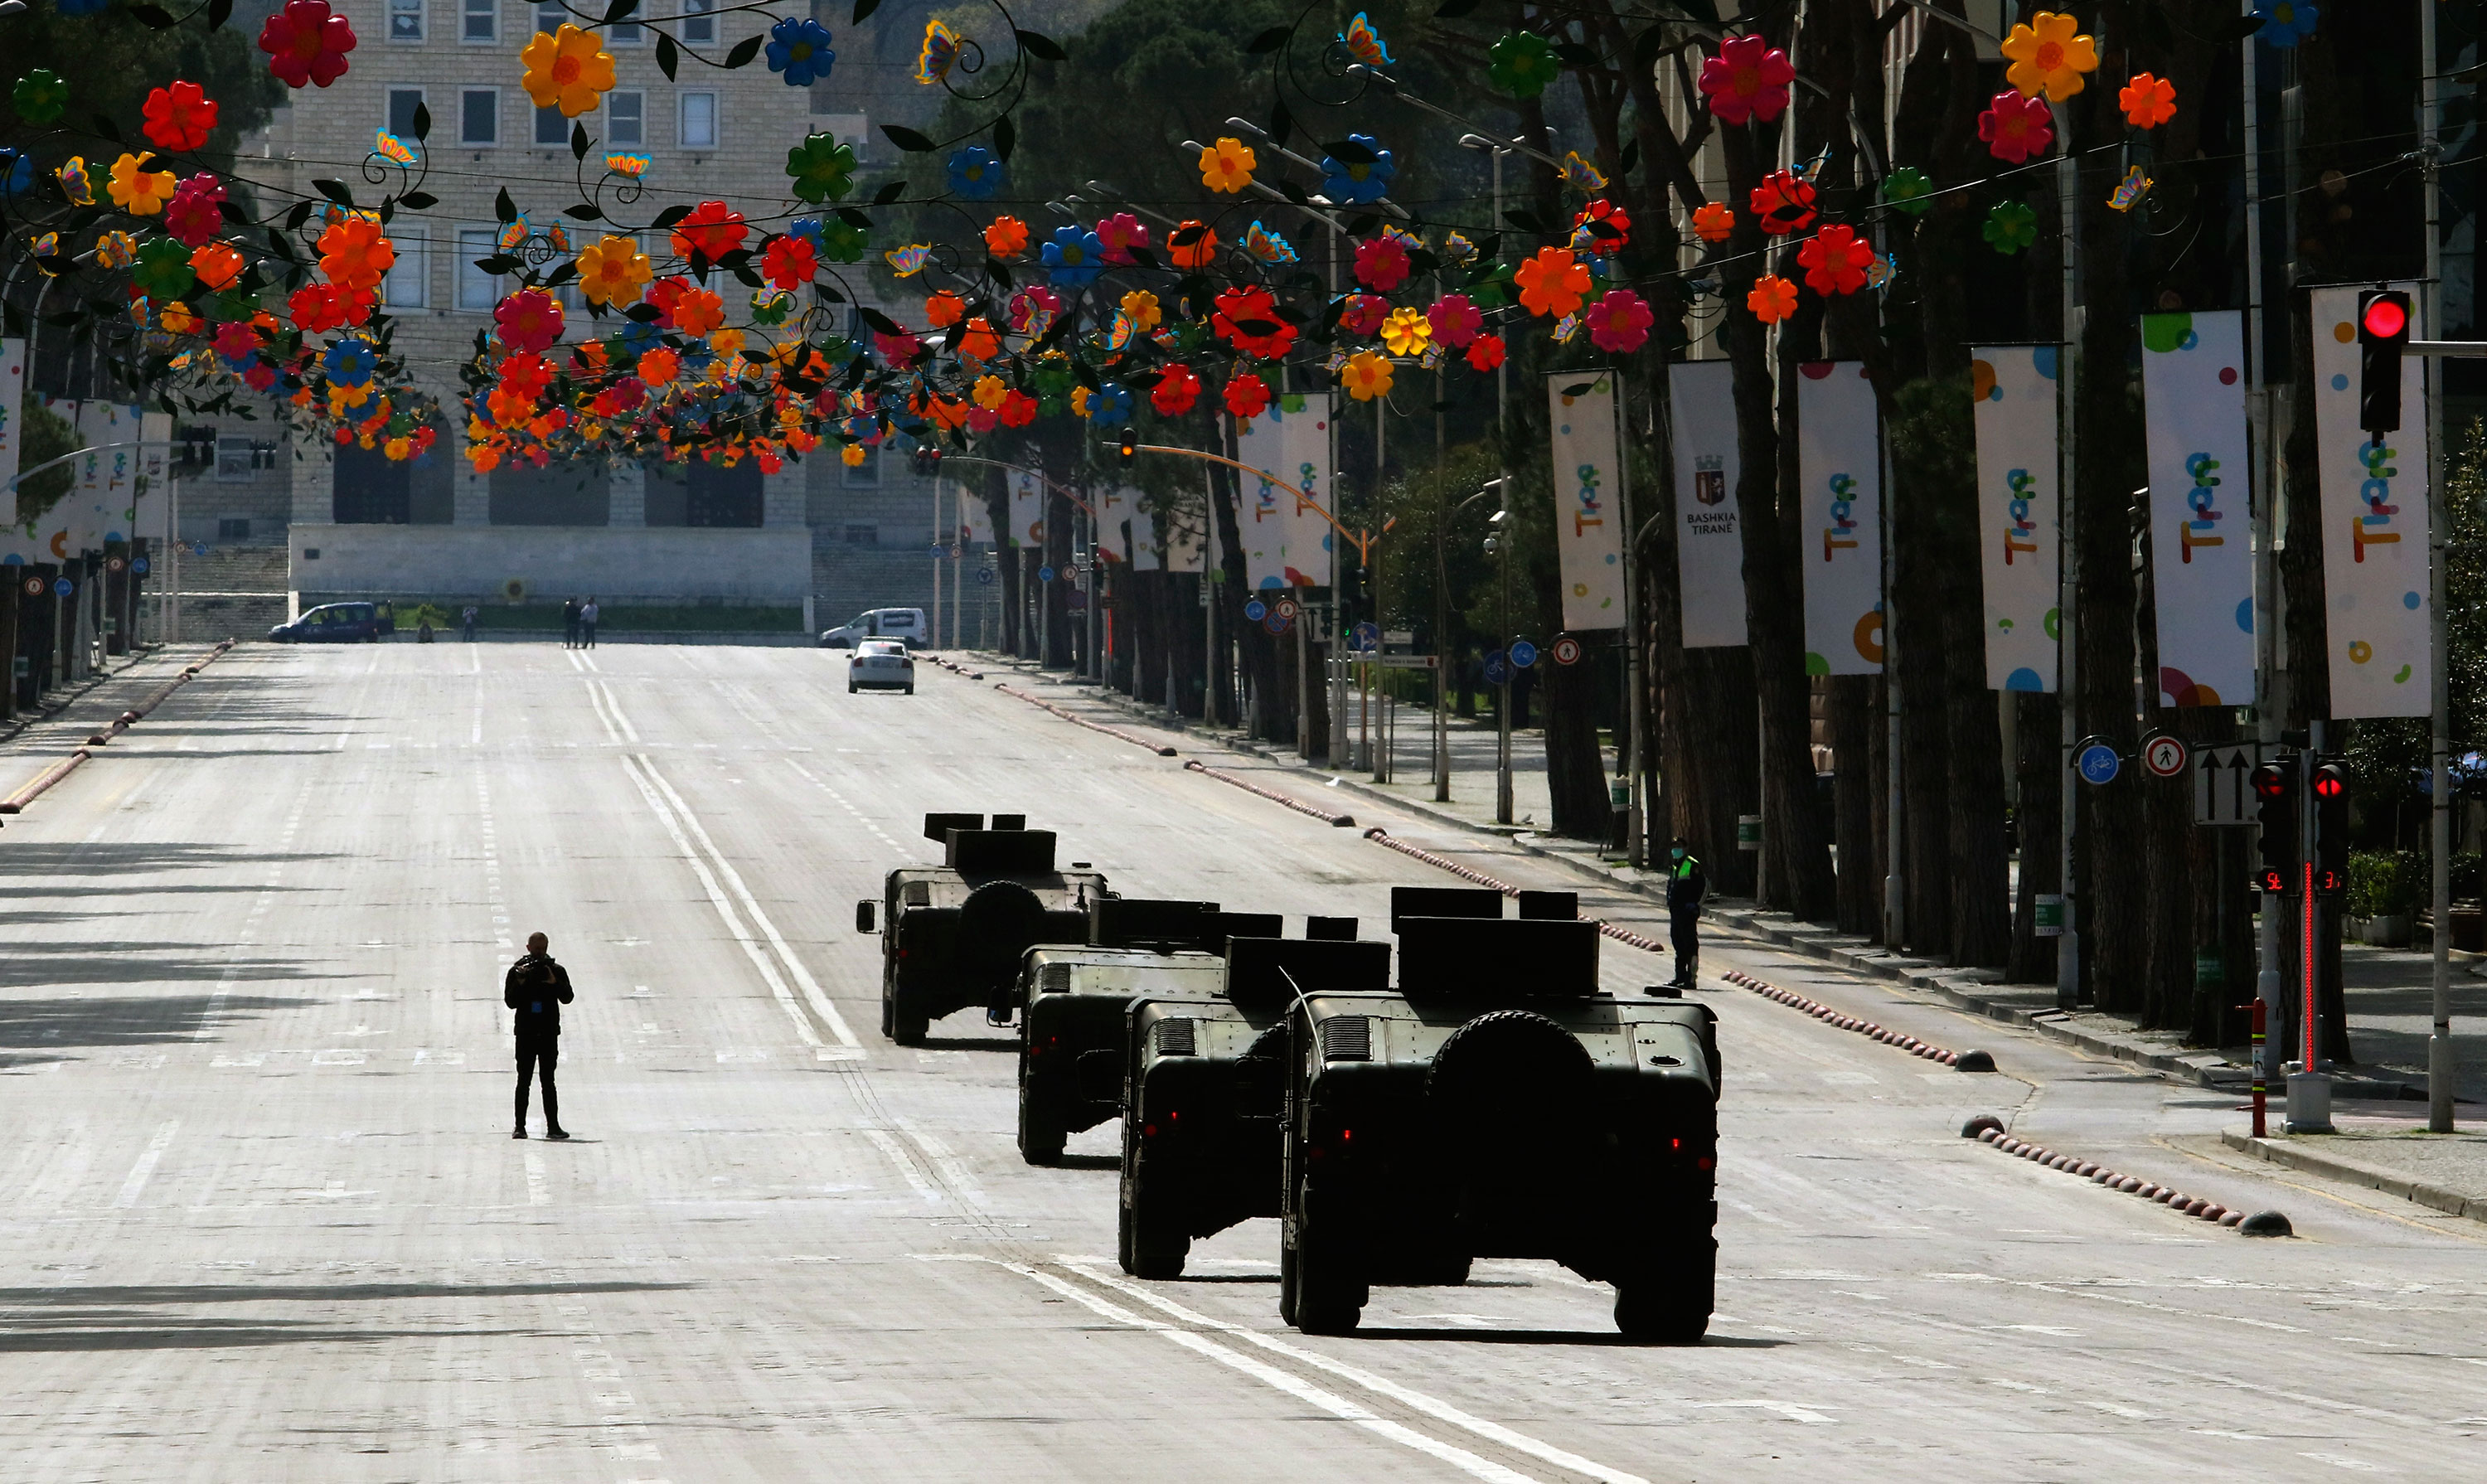 Military vehicles patrol the streets of Tirana, Albania on March 22.